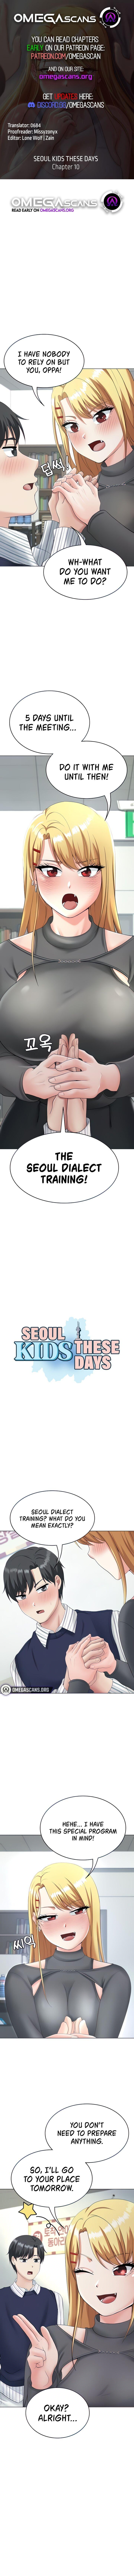 Seoul Kids these Days 99